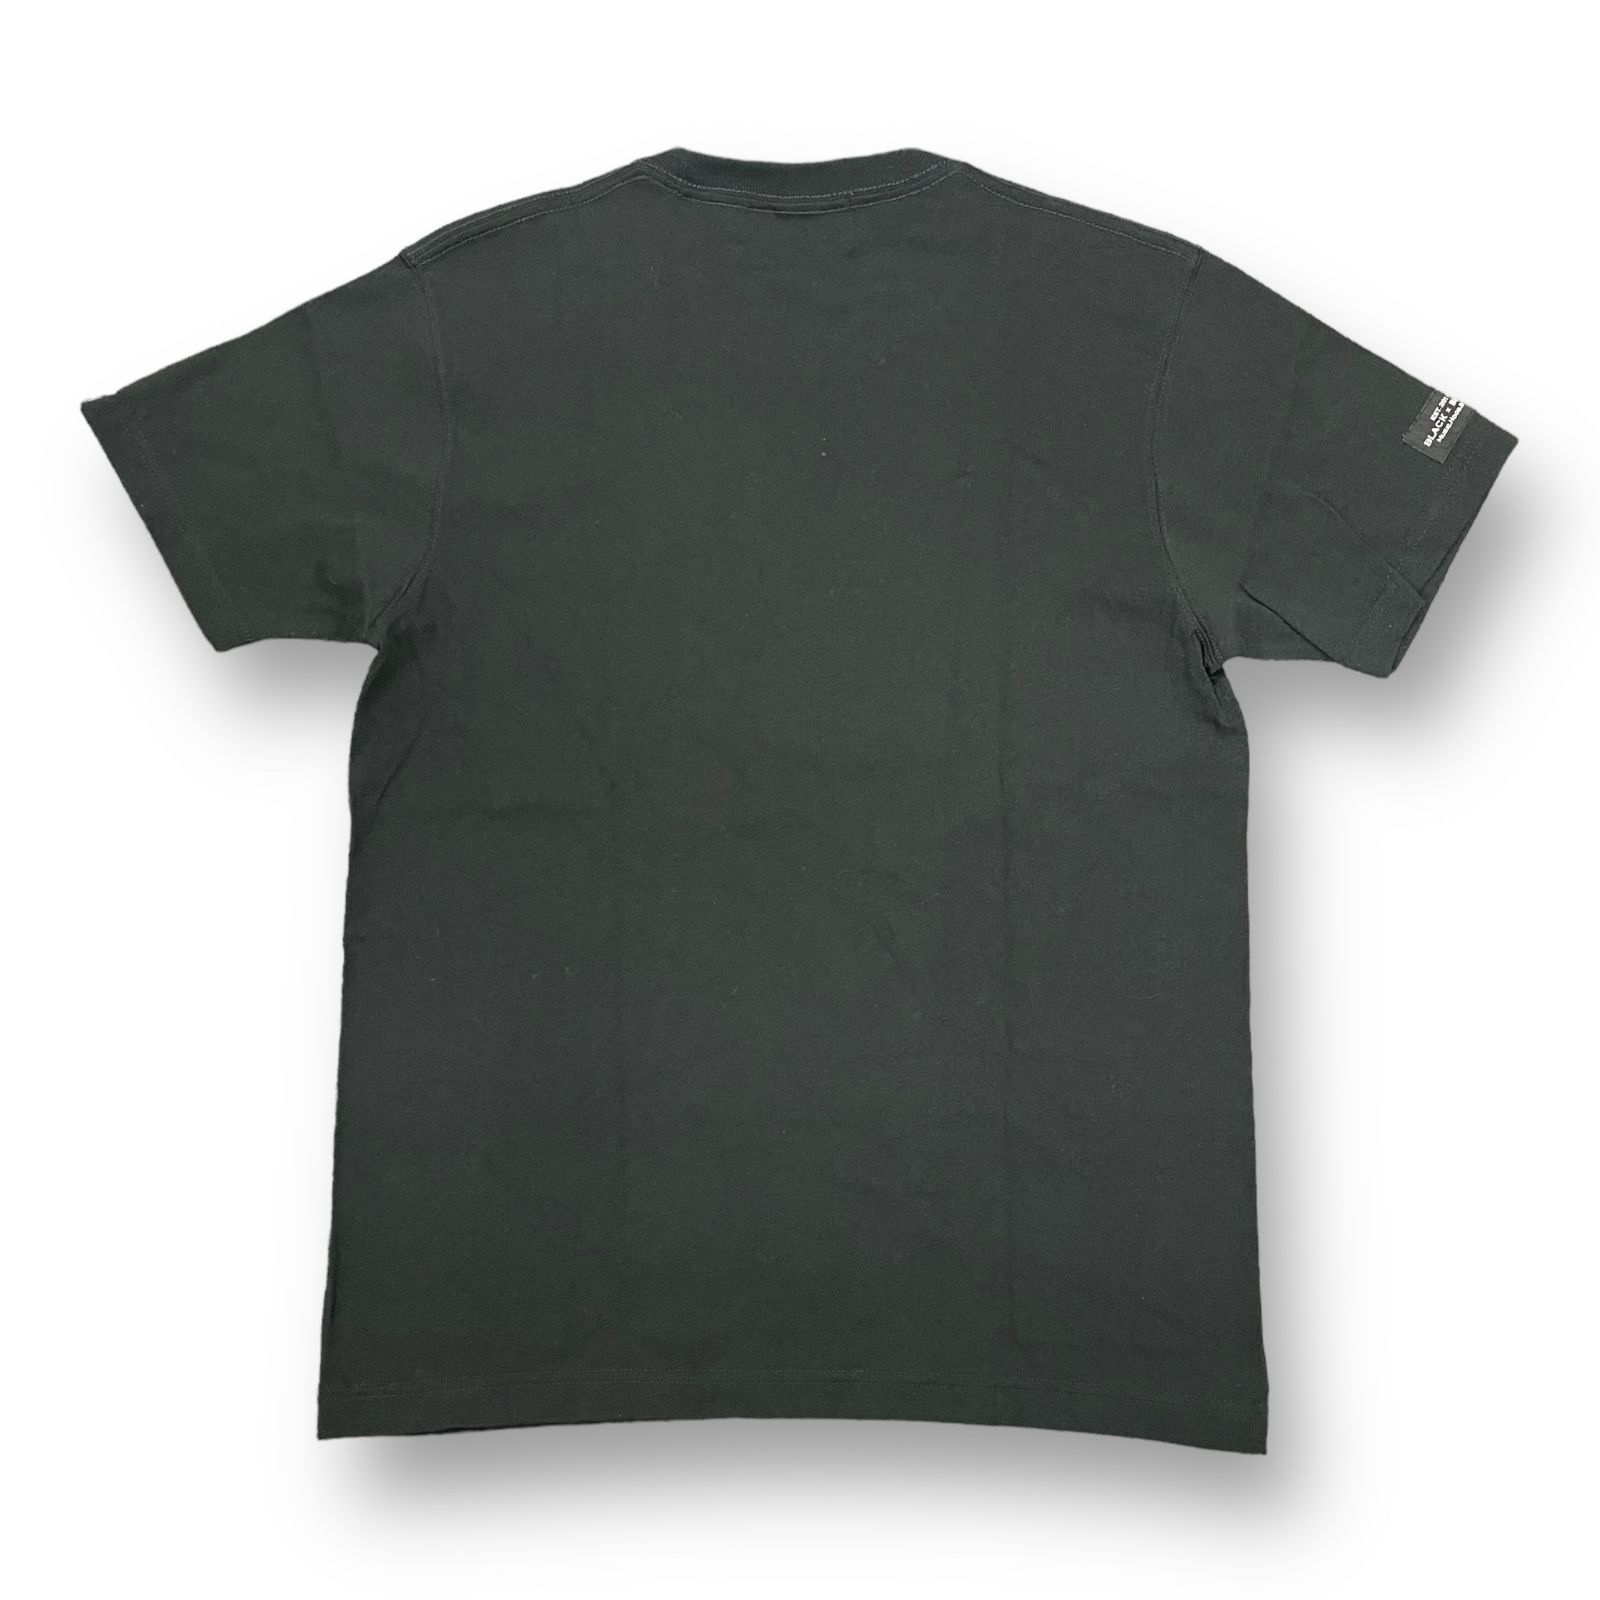 SAPEur BLACK×BLACK VENISGATE TEE コラボ プリント Tシャツ サプール